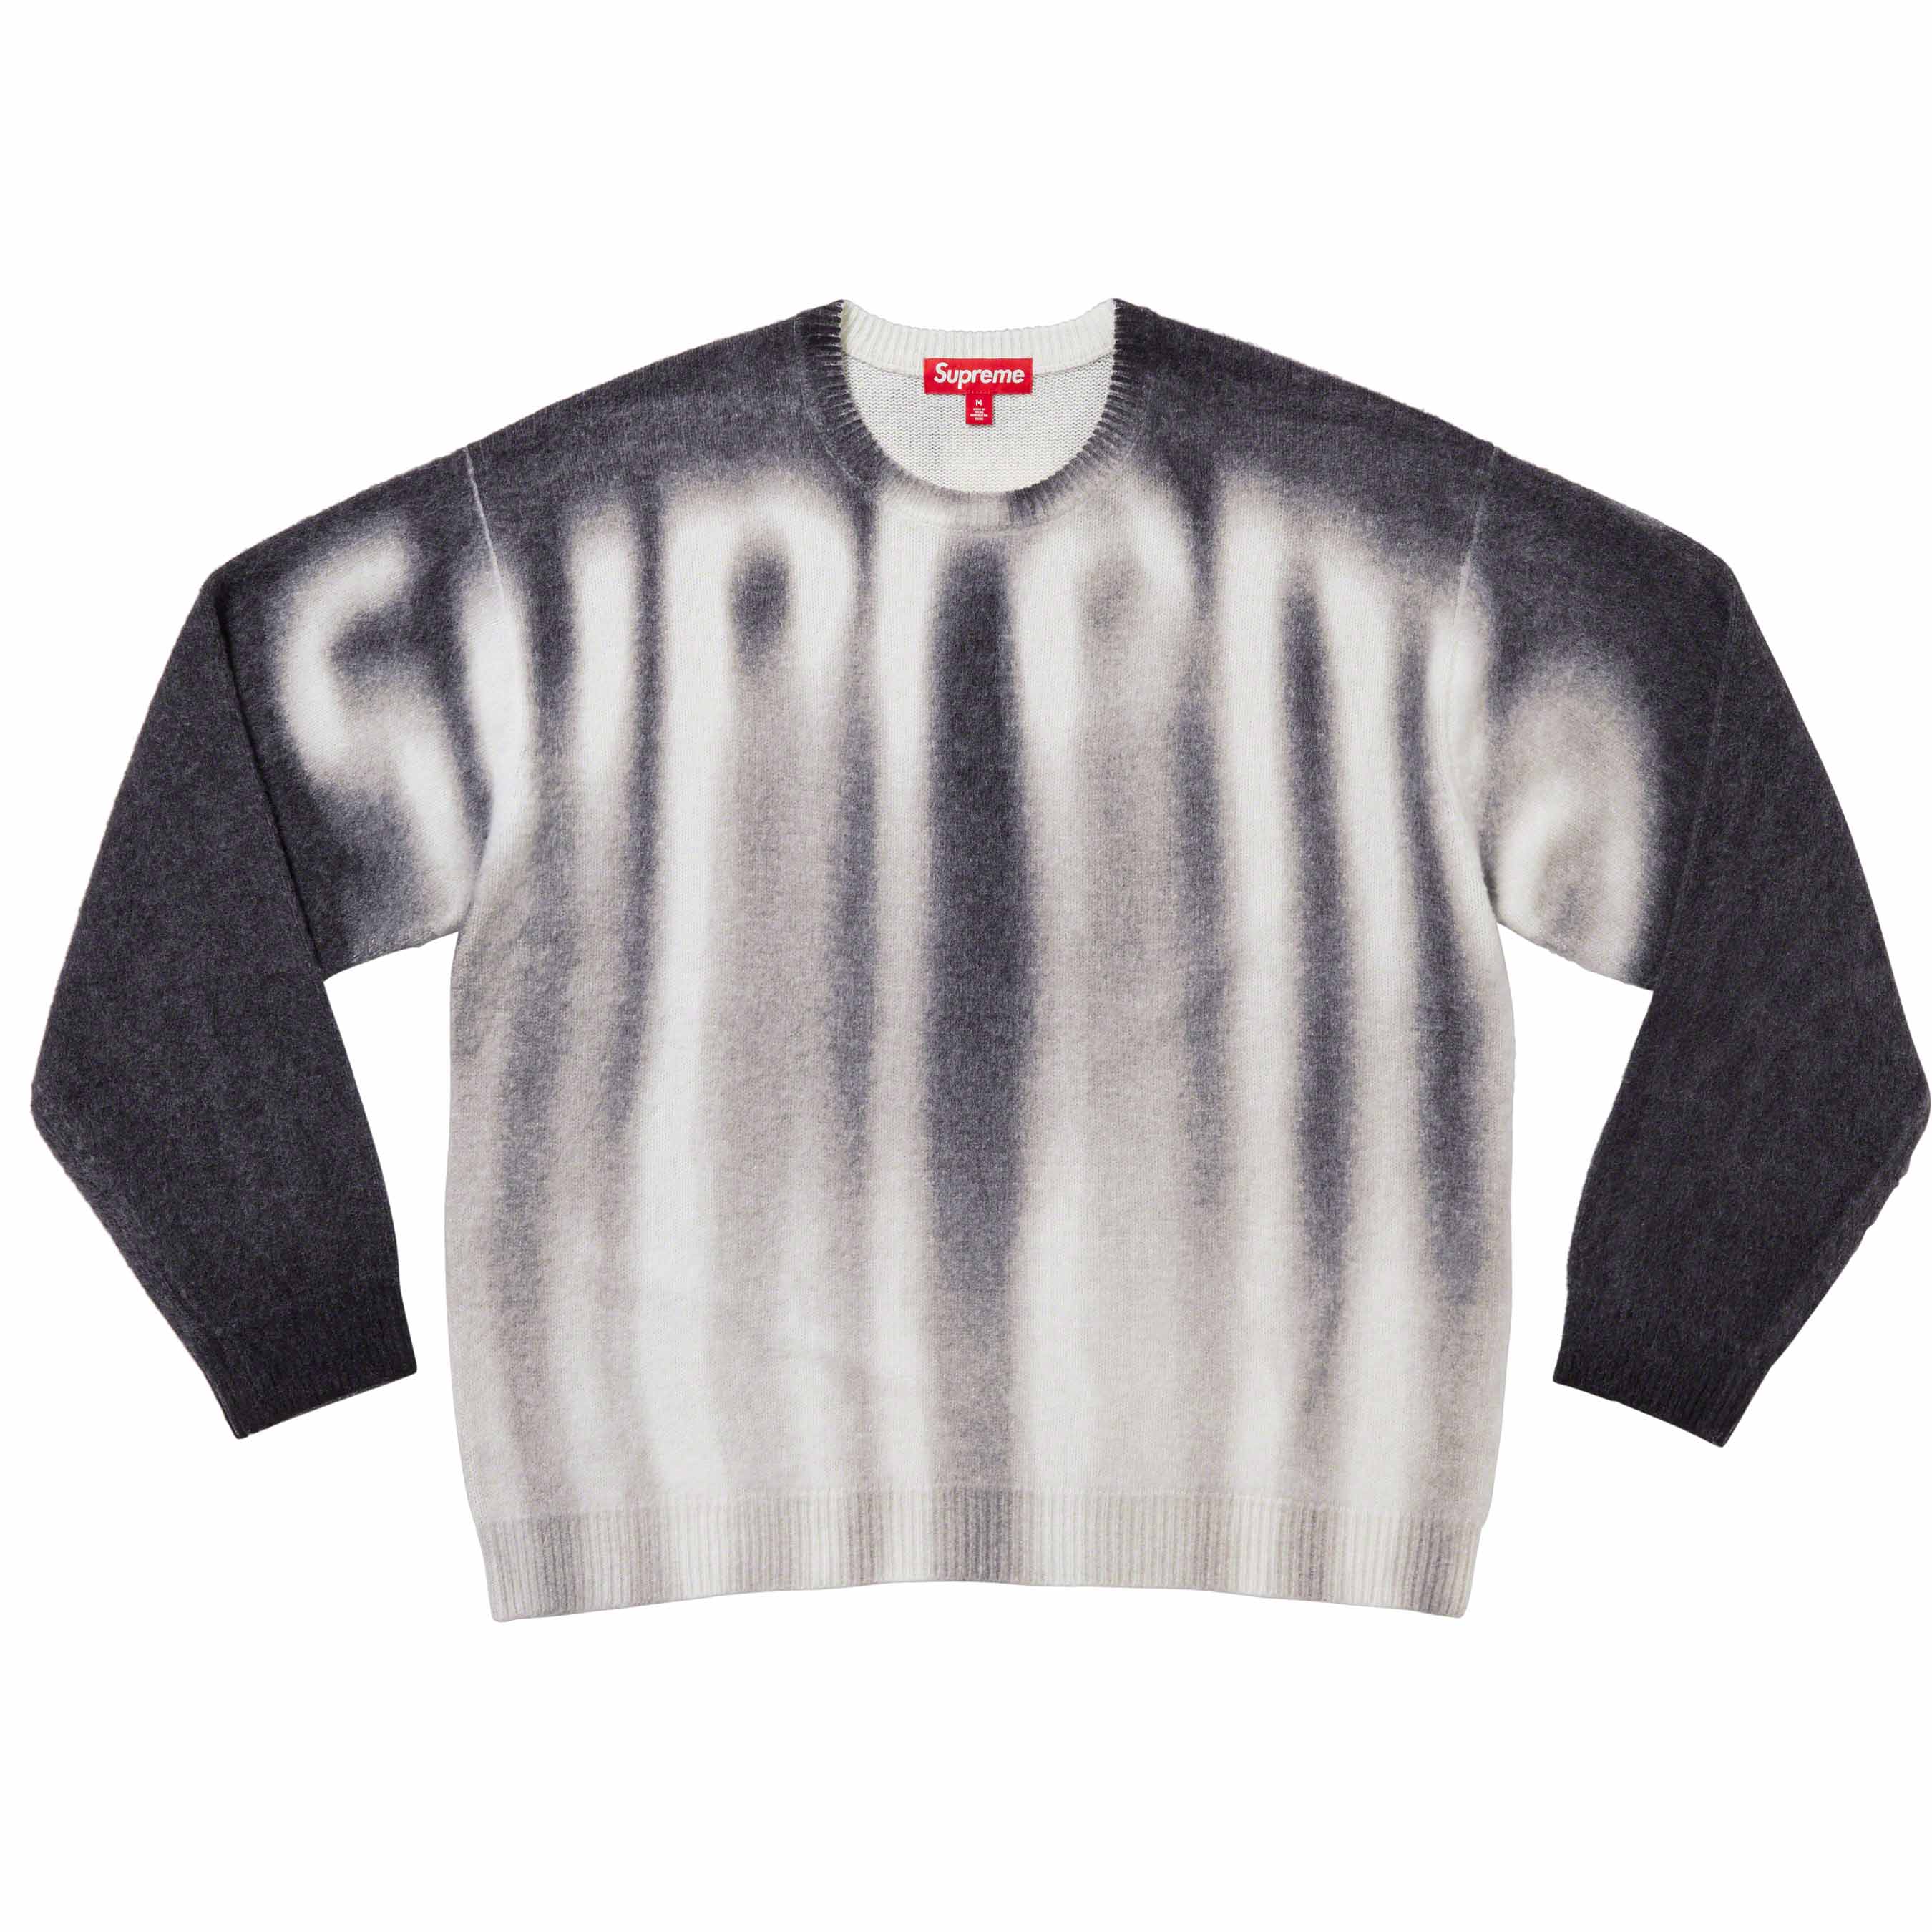 supreme blurred logo sweater black Msize